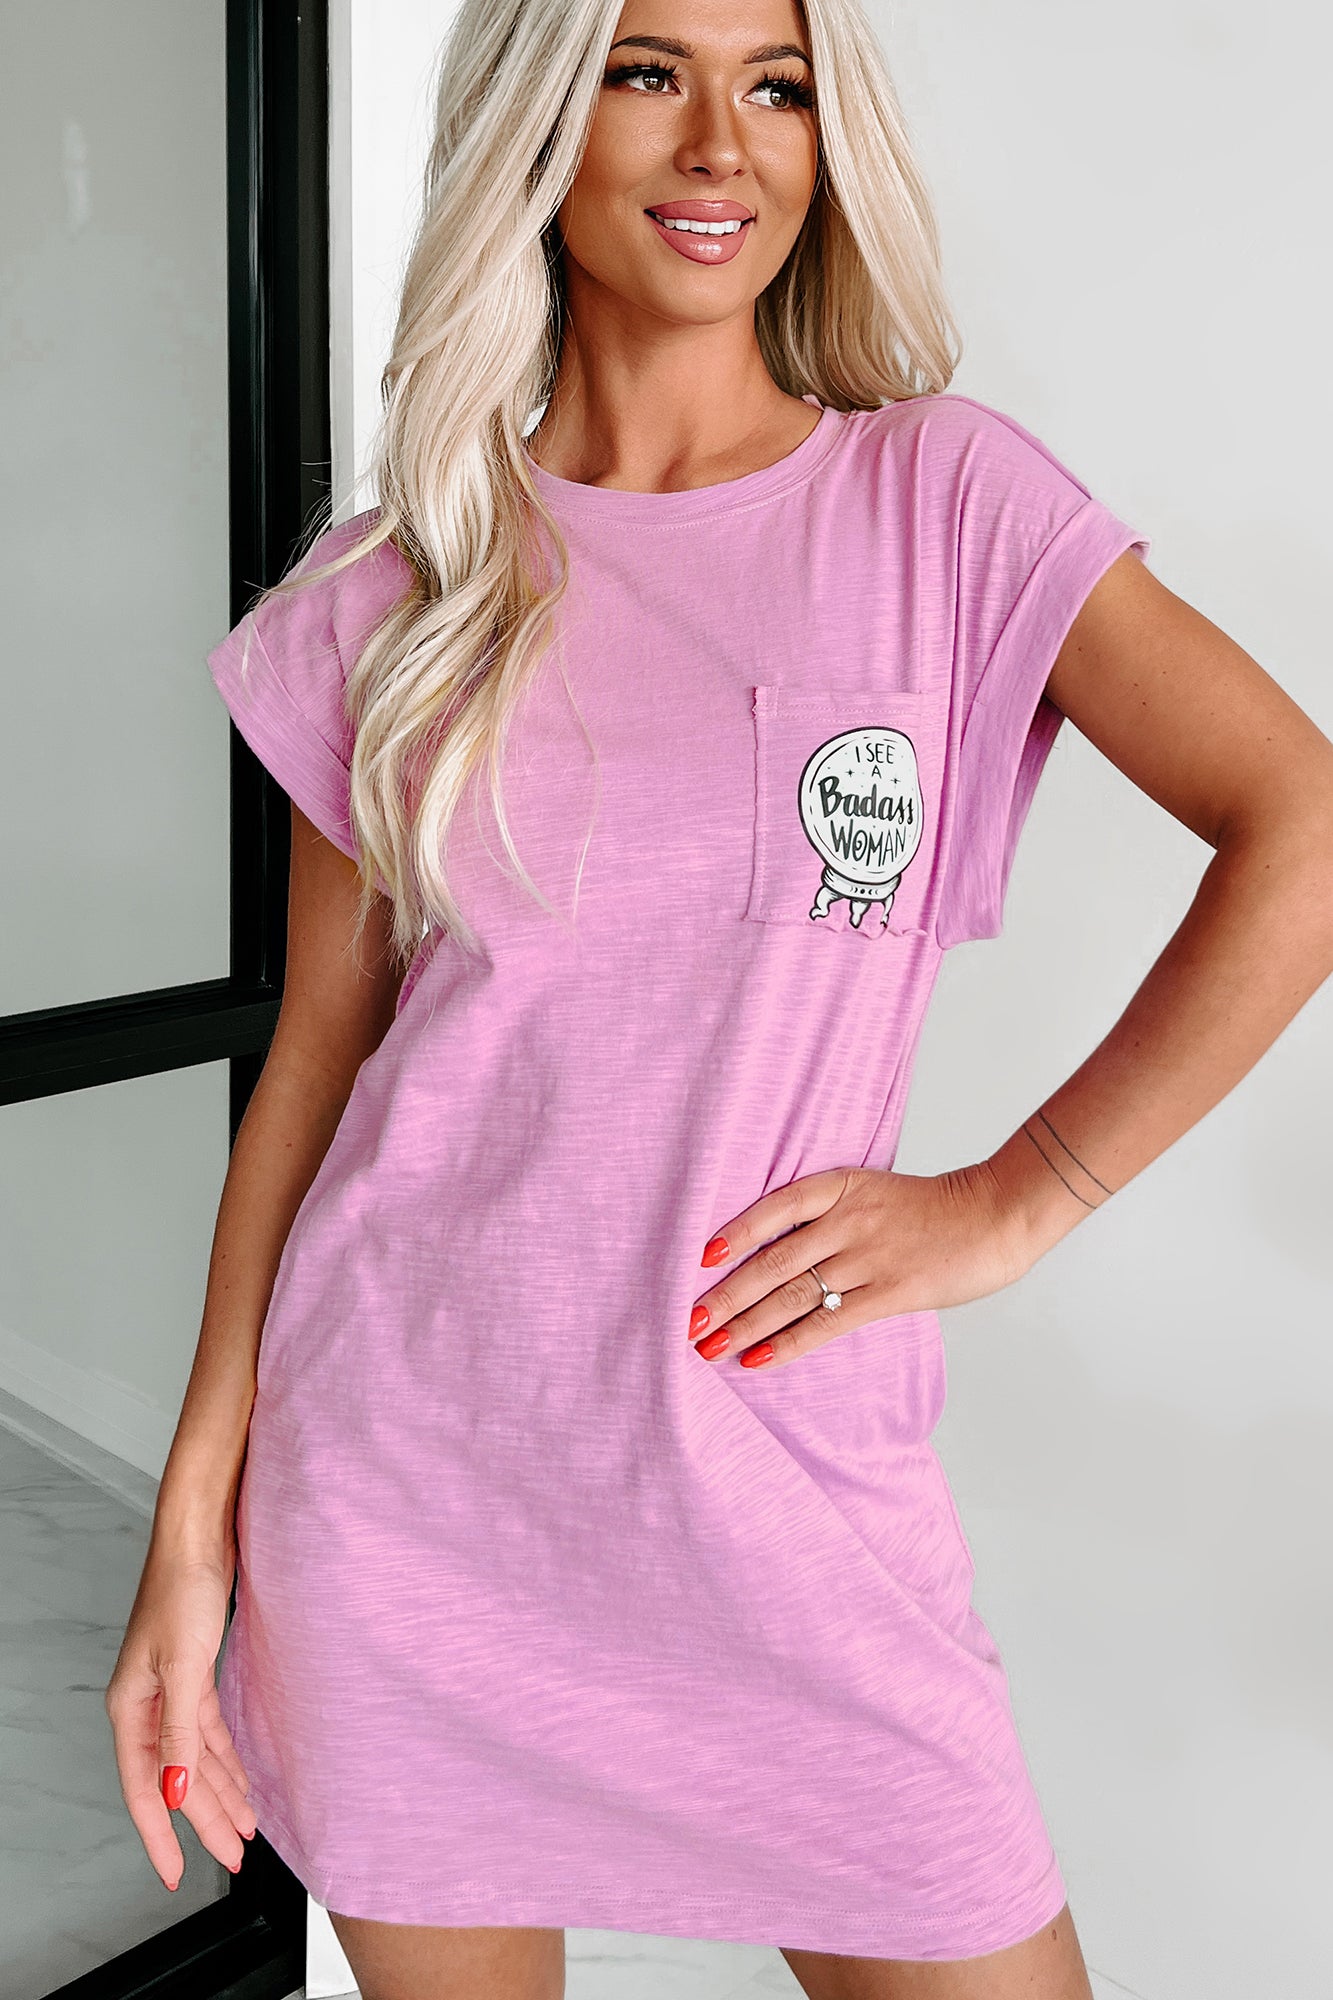 Doorbuster "Badass Woman" Graphic T-Shirt Dress (Lavender) - Print On Demand - NanaMacs